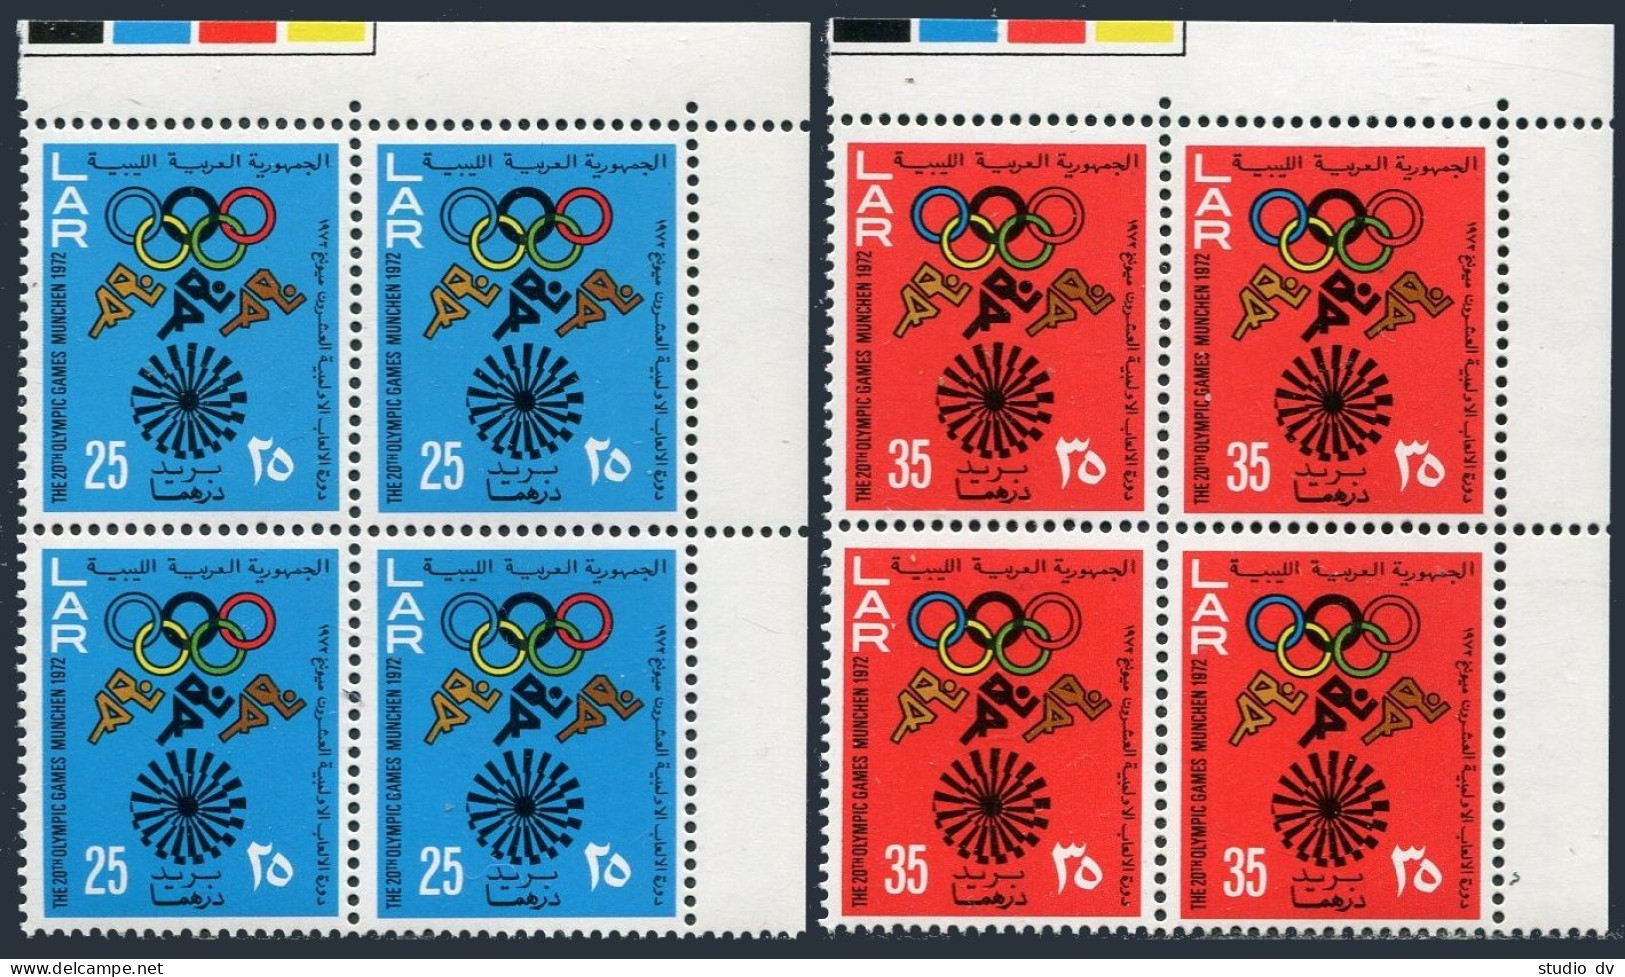 Libya 483-484 Blocks/4, MNH. Michel 399-400. Olympics Munich-1972. Emblem. - Libyen